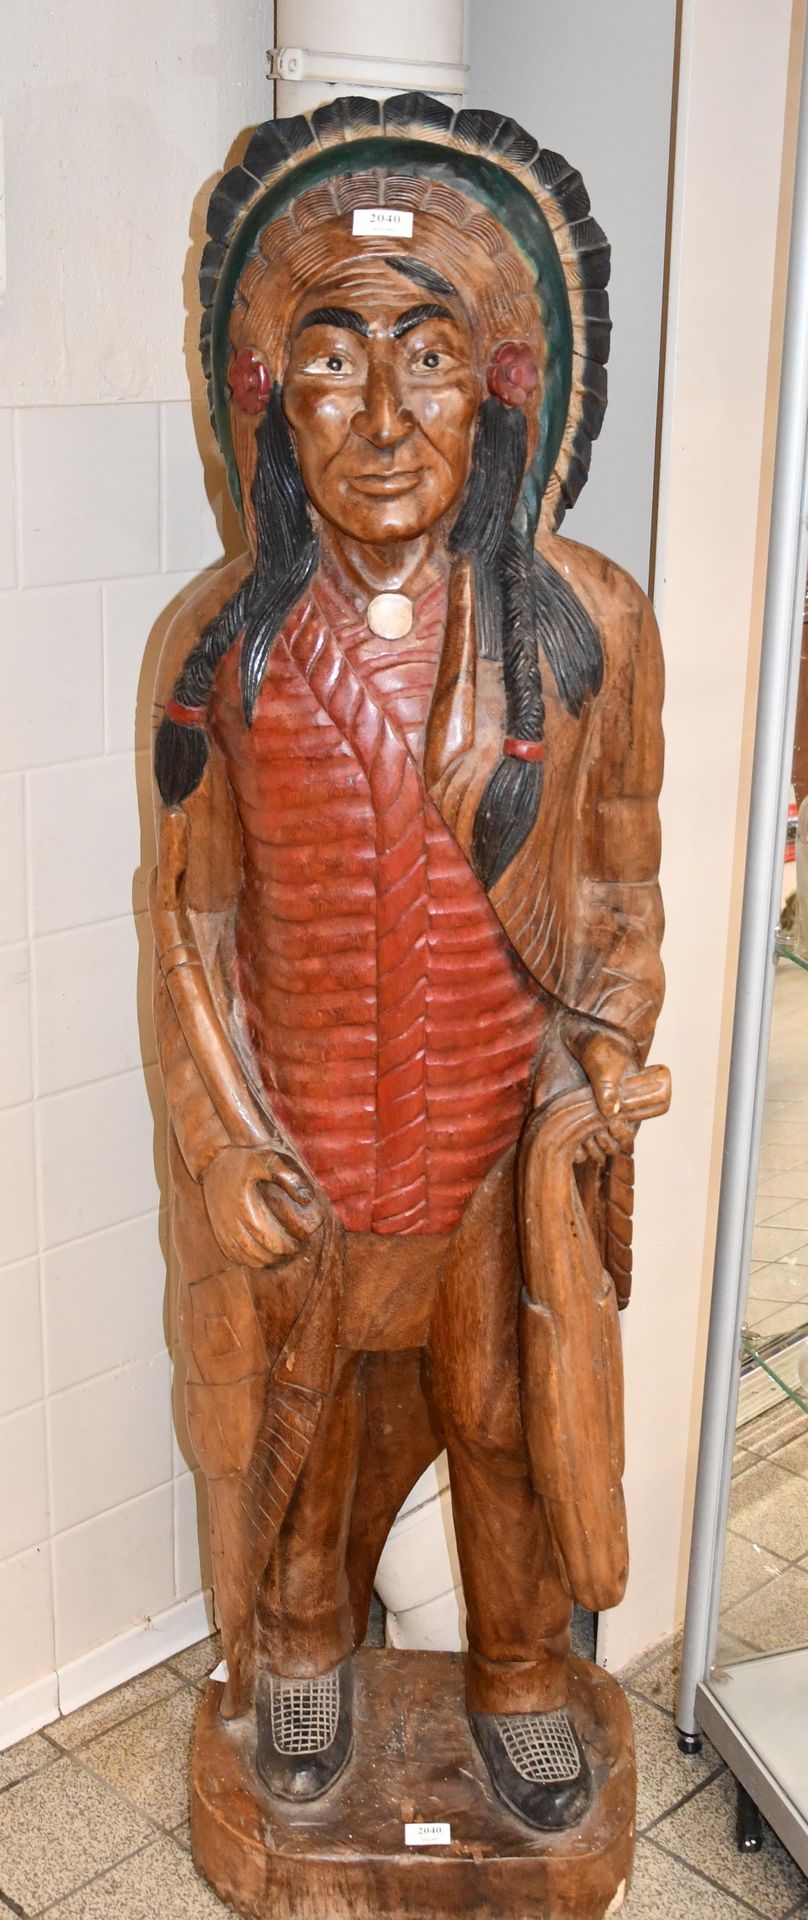 Null 多色和天然木材雕塑："印第安人"，站立式 - 在 "Affaire conclue "展览上获得。

身高：151厘米。